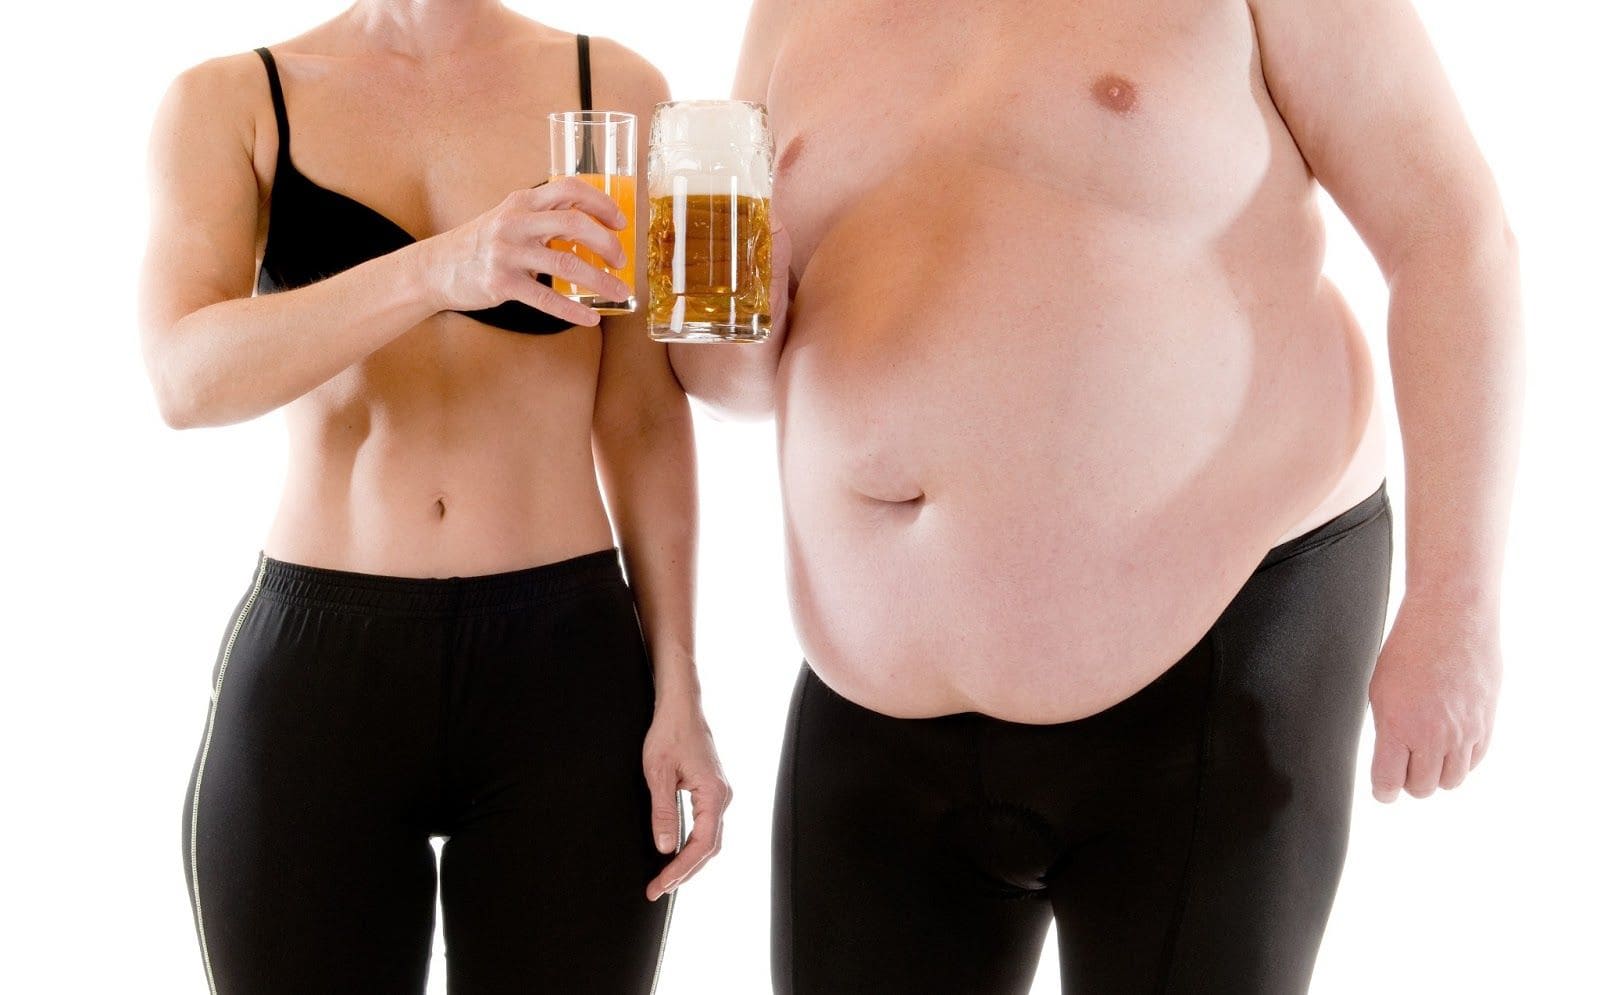 Как Пиво Влияет На Лишний Вес